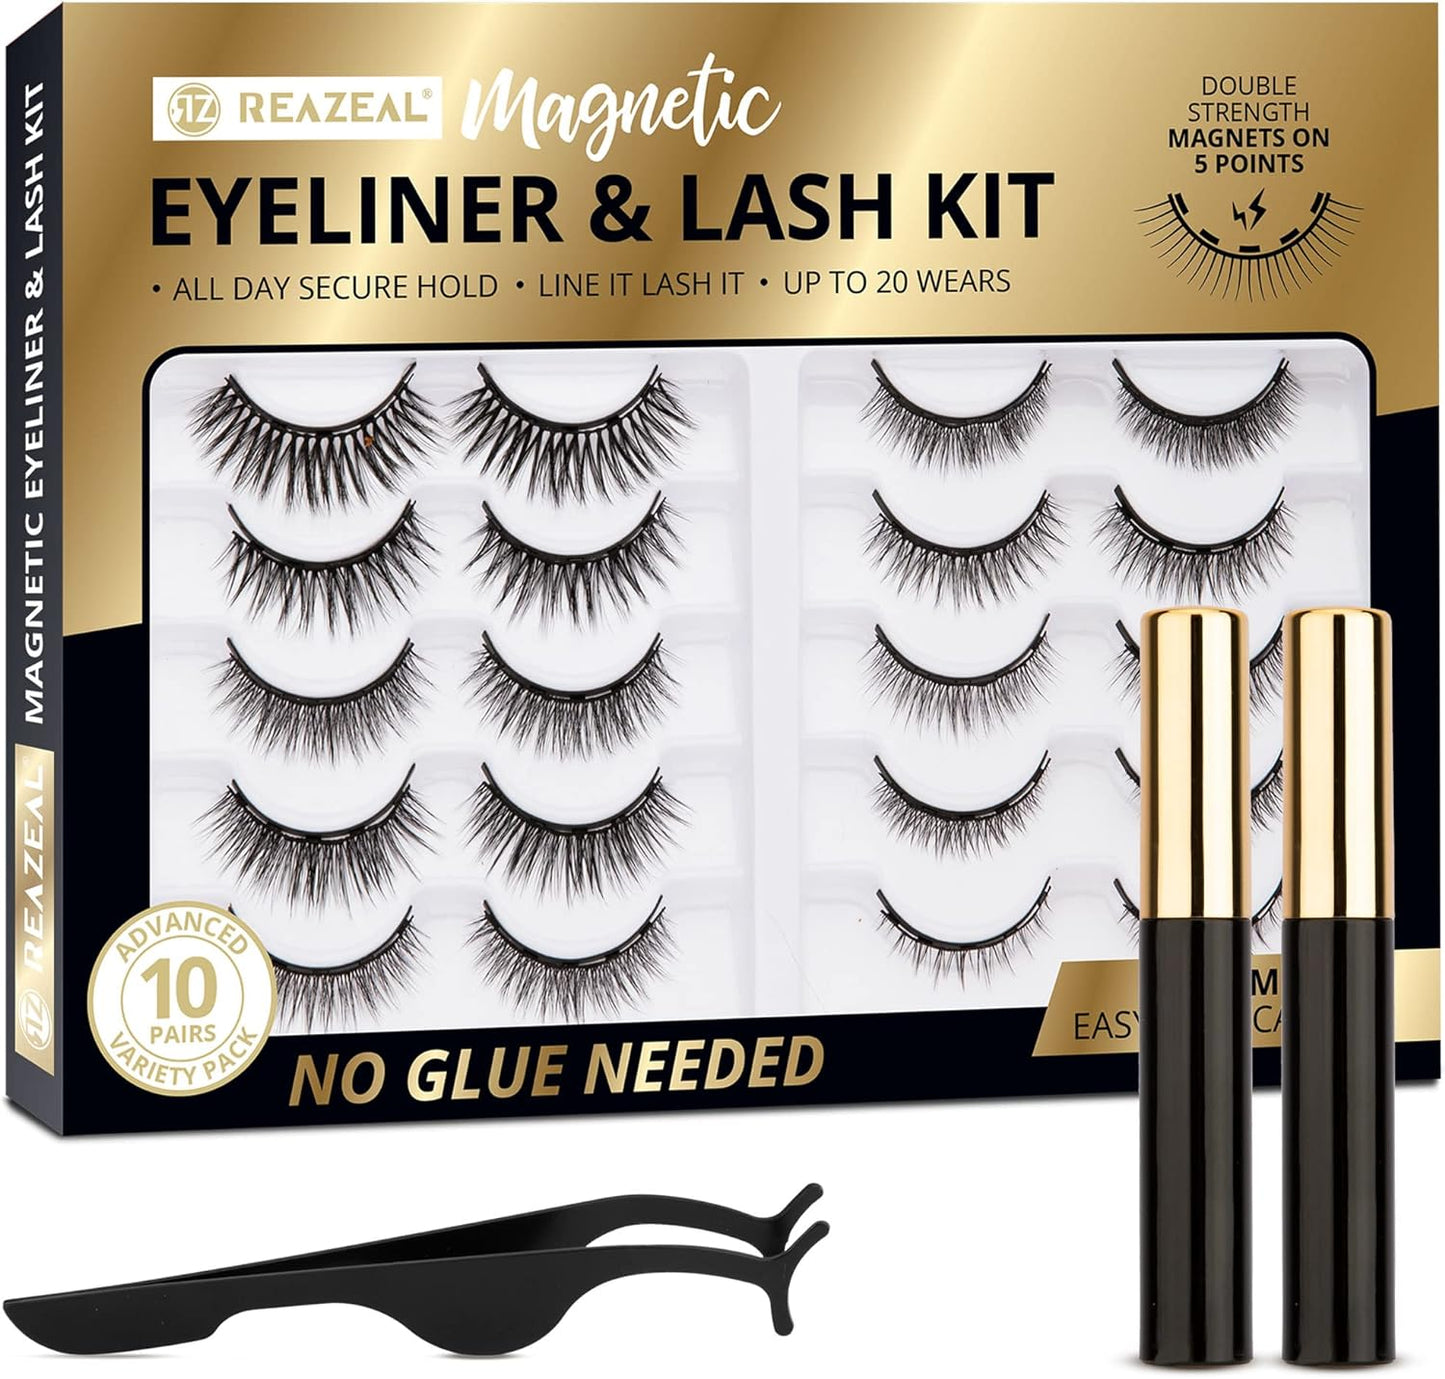 Magnetic Eyeliner & Lash Kit